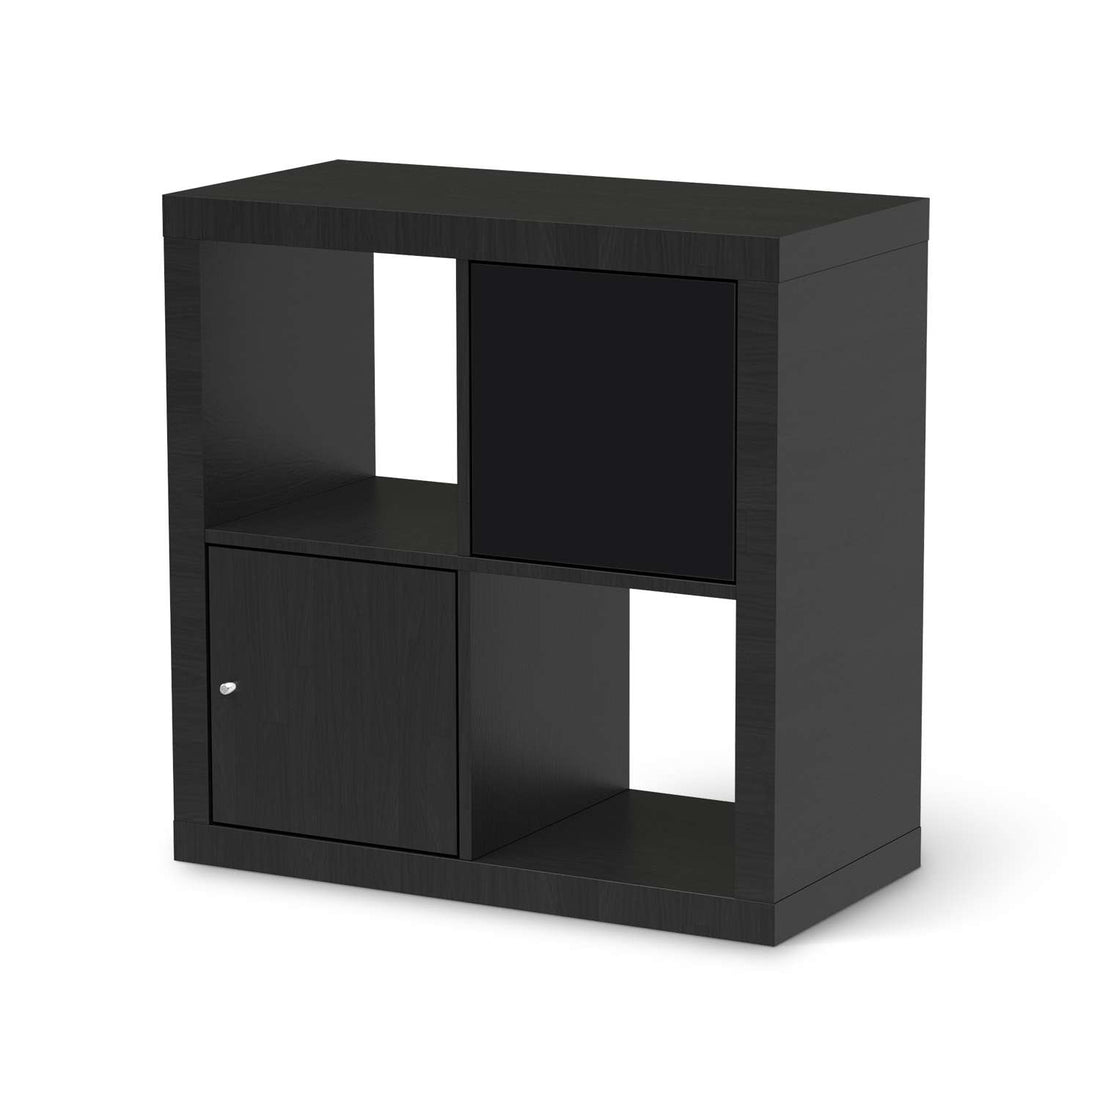 Selbstklebende Folie Schwarz - IKEA Kallax Regal 1 Türe - schwarz